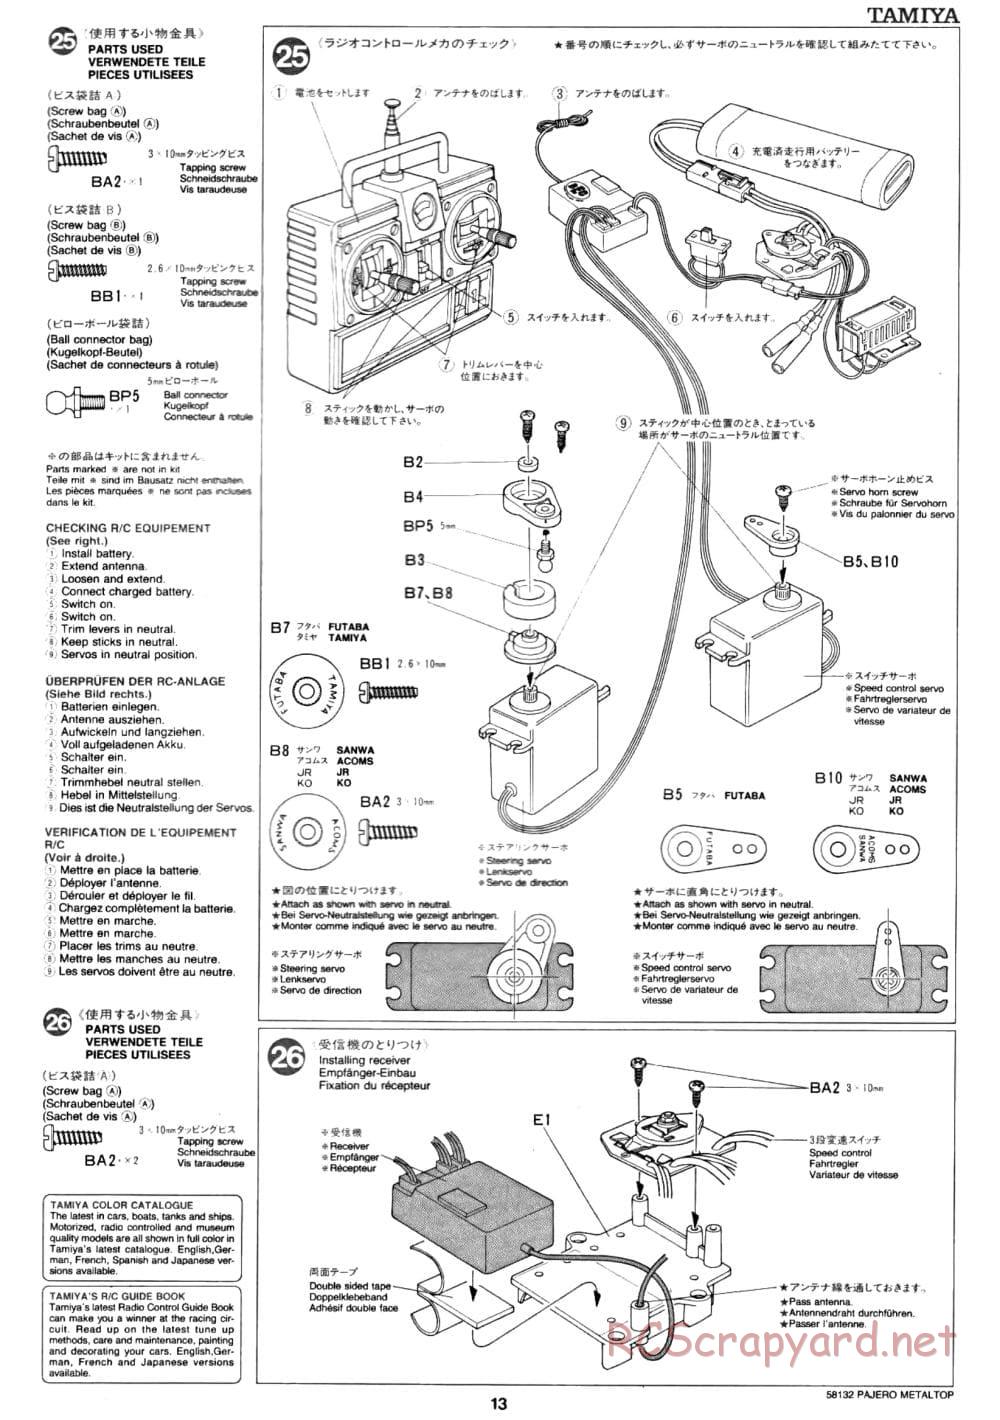 Tamiya - Mitsubishi Pajero Metaltop Wide - CC-01 Chassis - Manual - Page 13